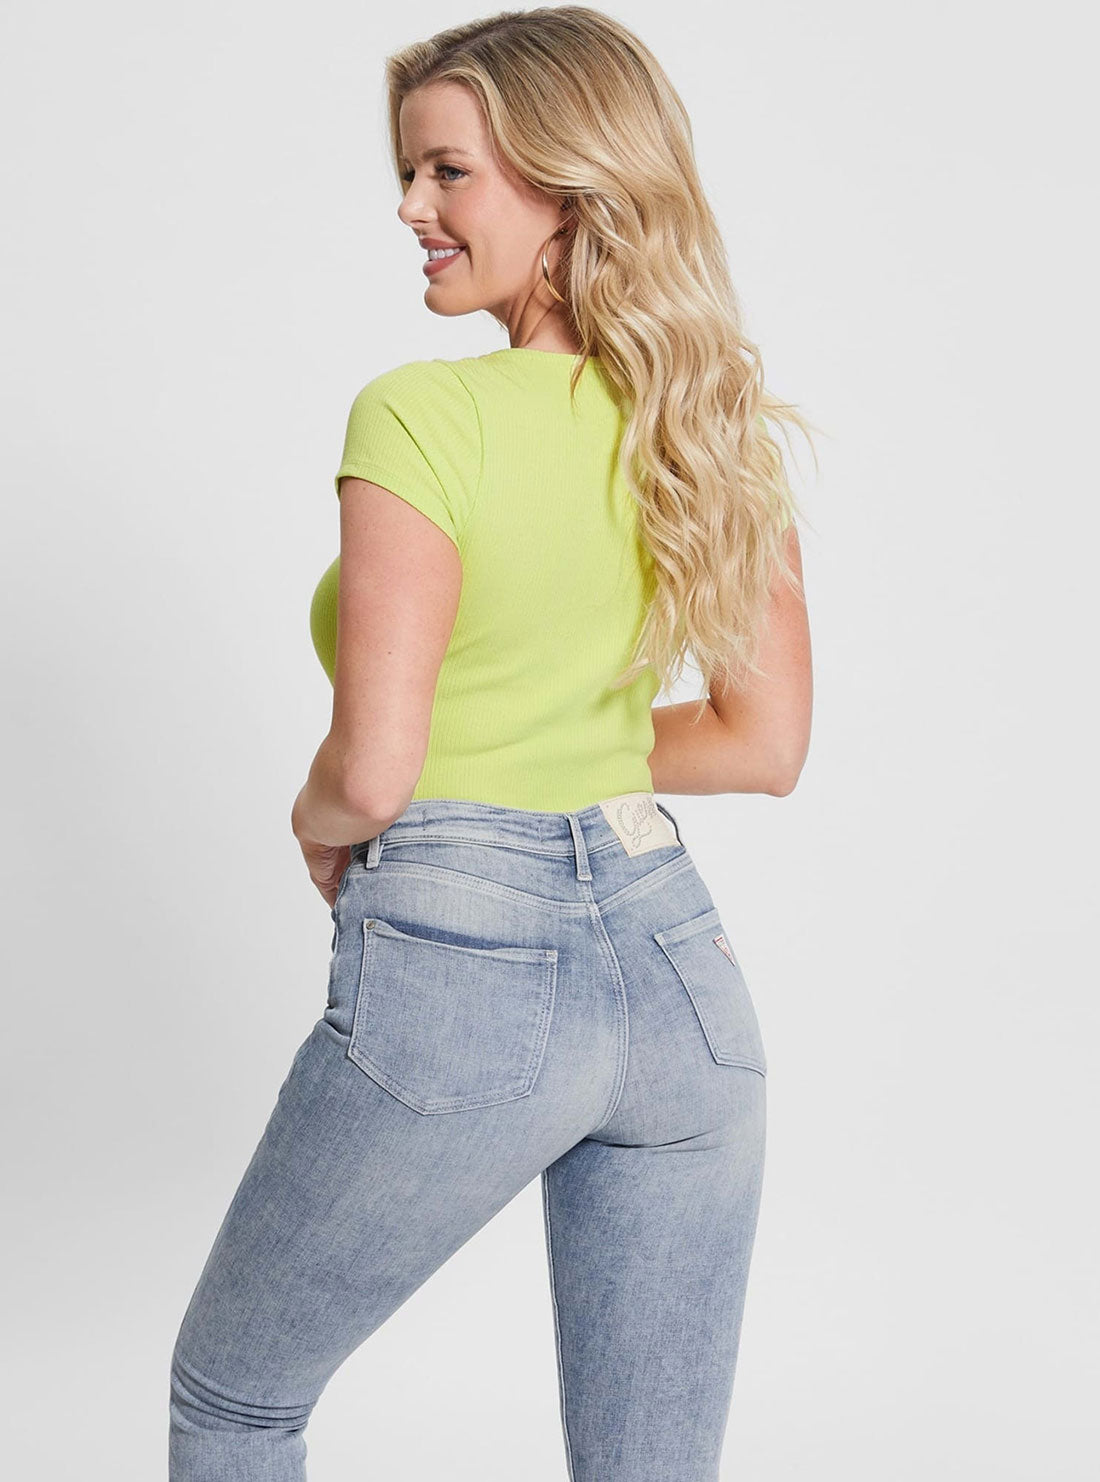 Eco Light Green Karlee Jewel Henley T-Shirt | GUESS Women's | back view